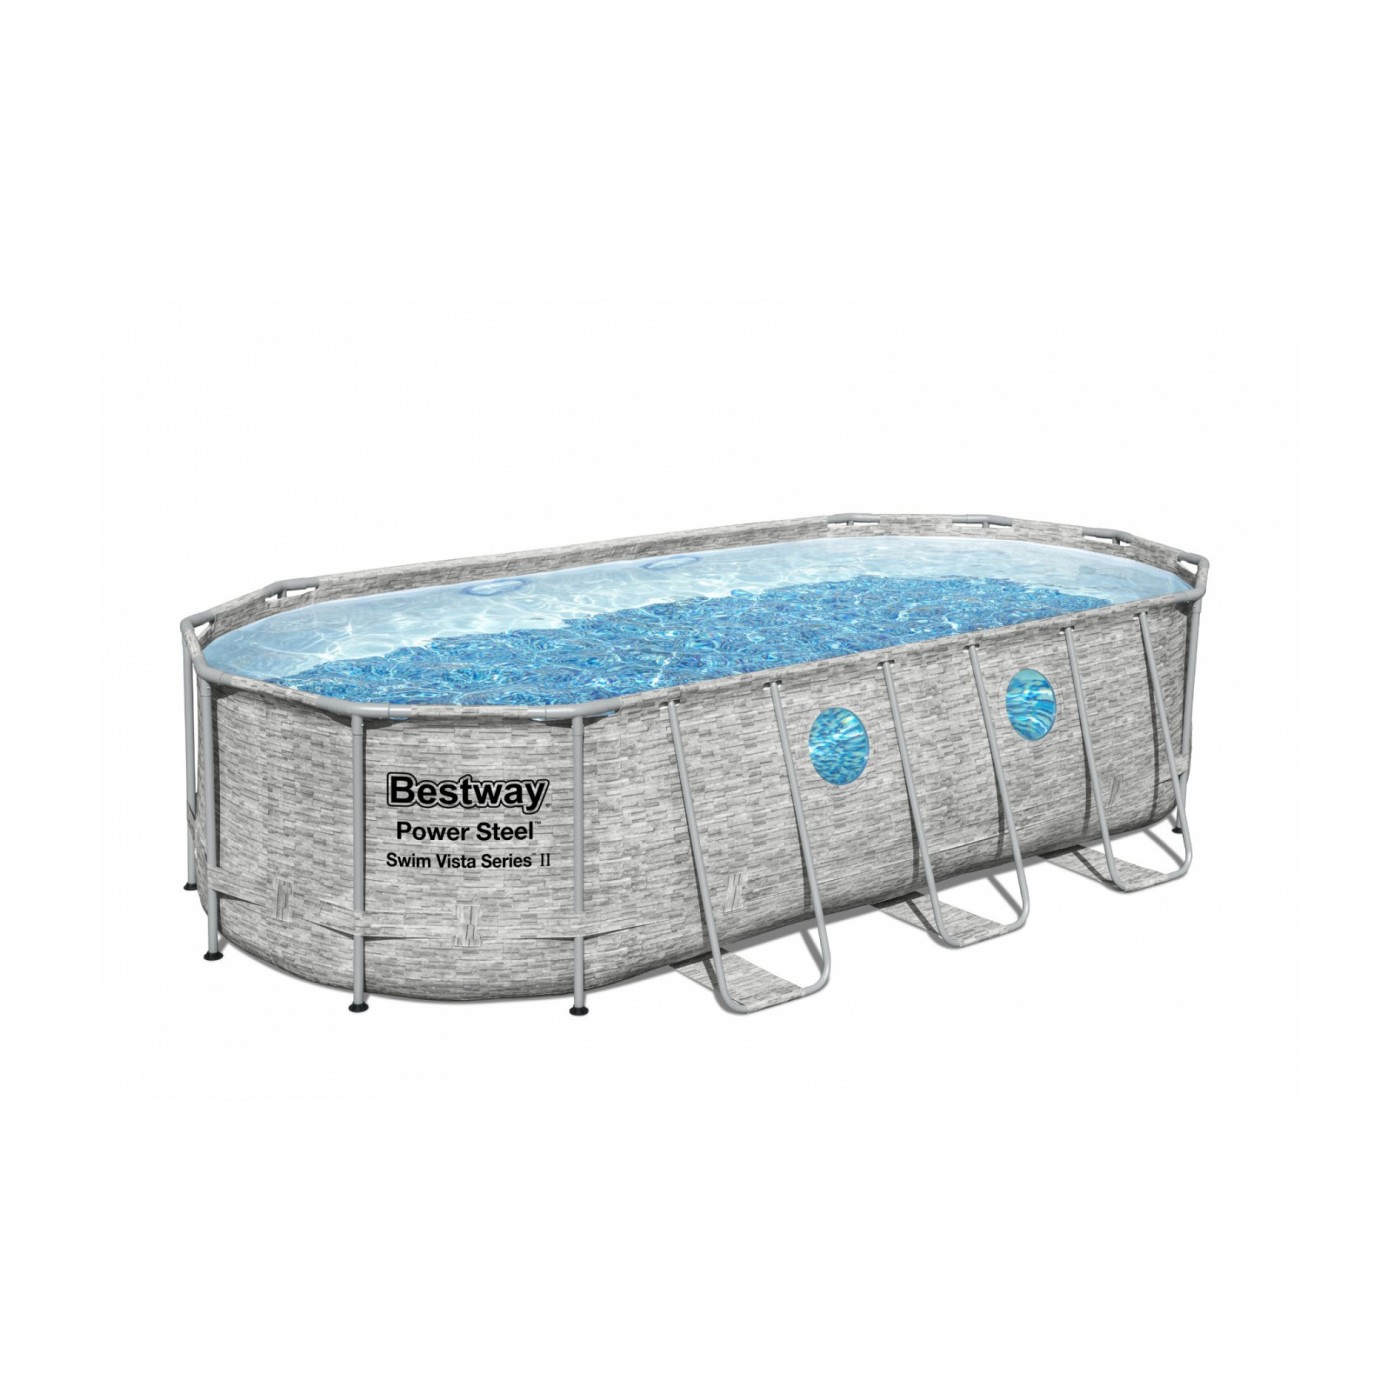 Rack pool 549 cm x 274 cm x 122 cm, Power Steel Swim VISTA s